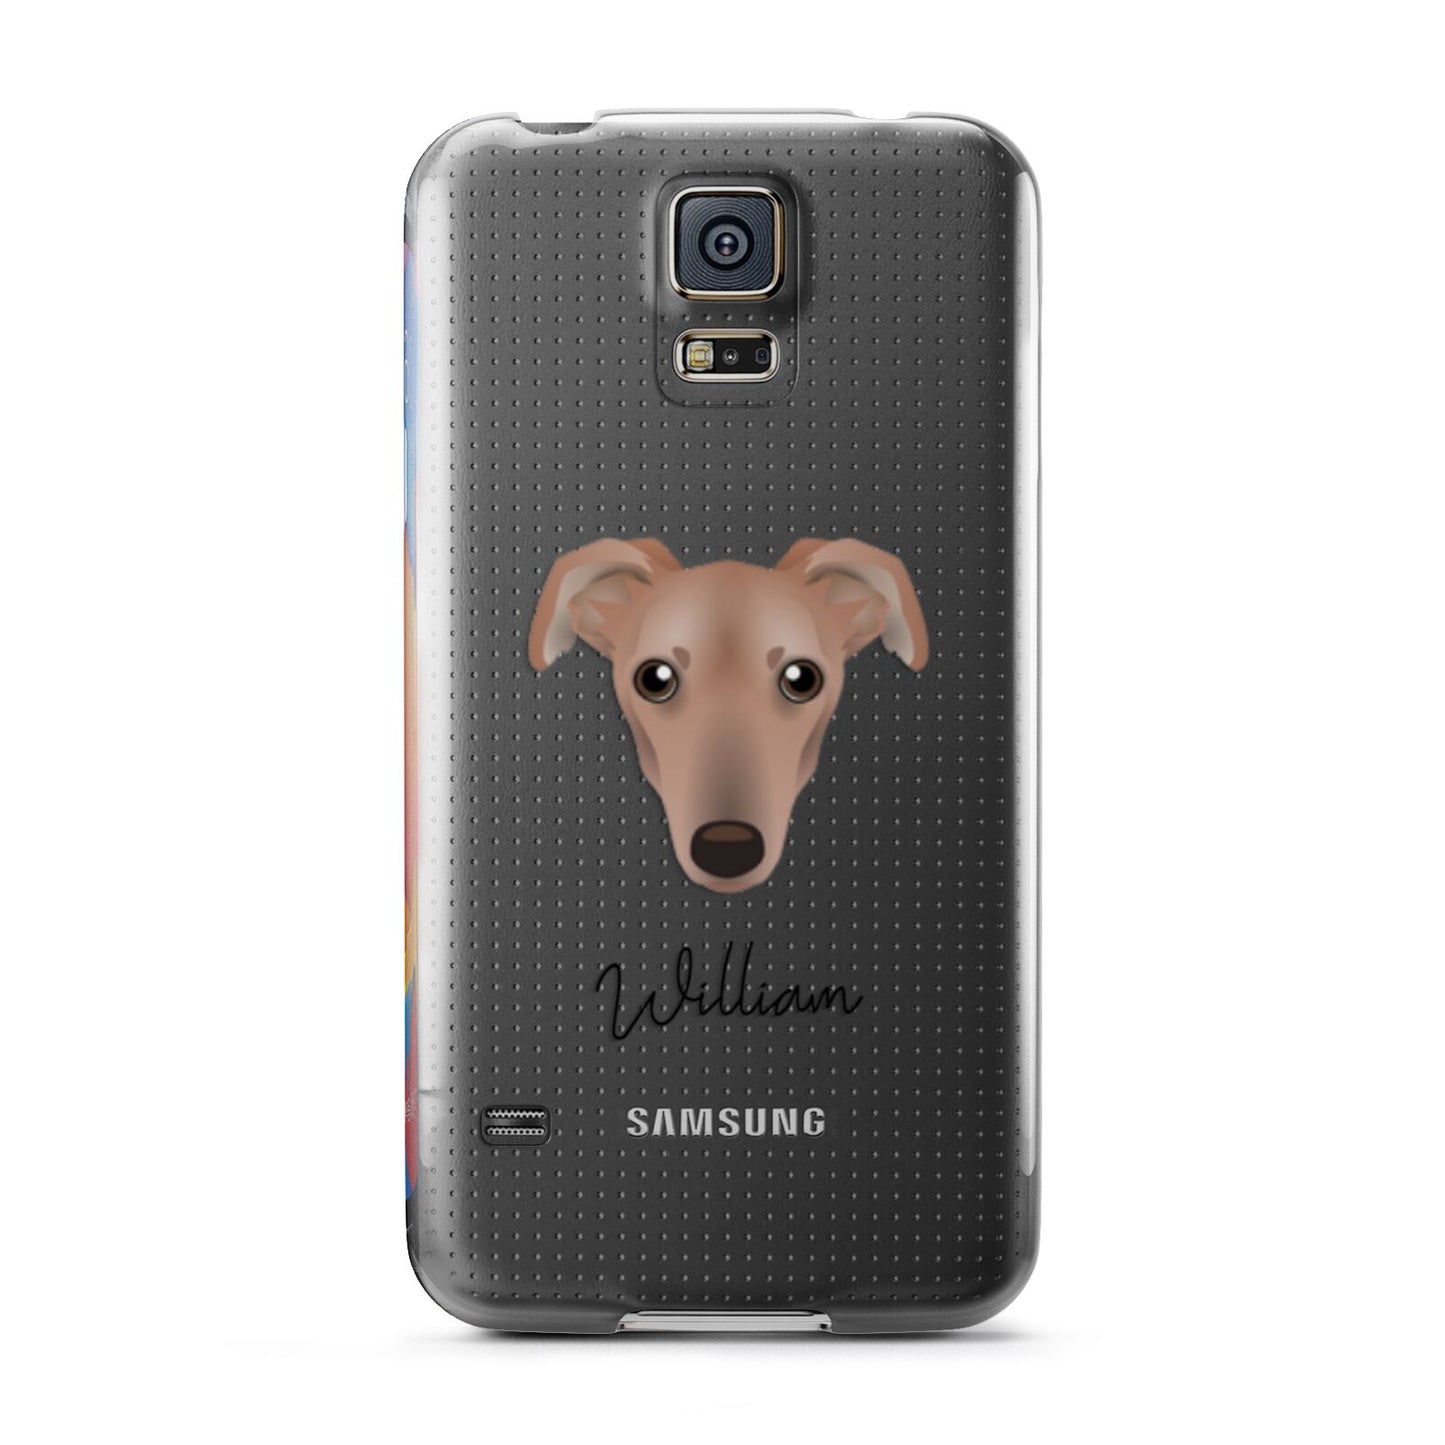 Lurcher Personalised Samsung Galaxy S5 Case